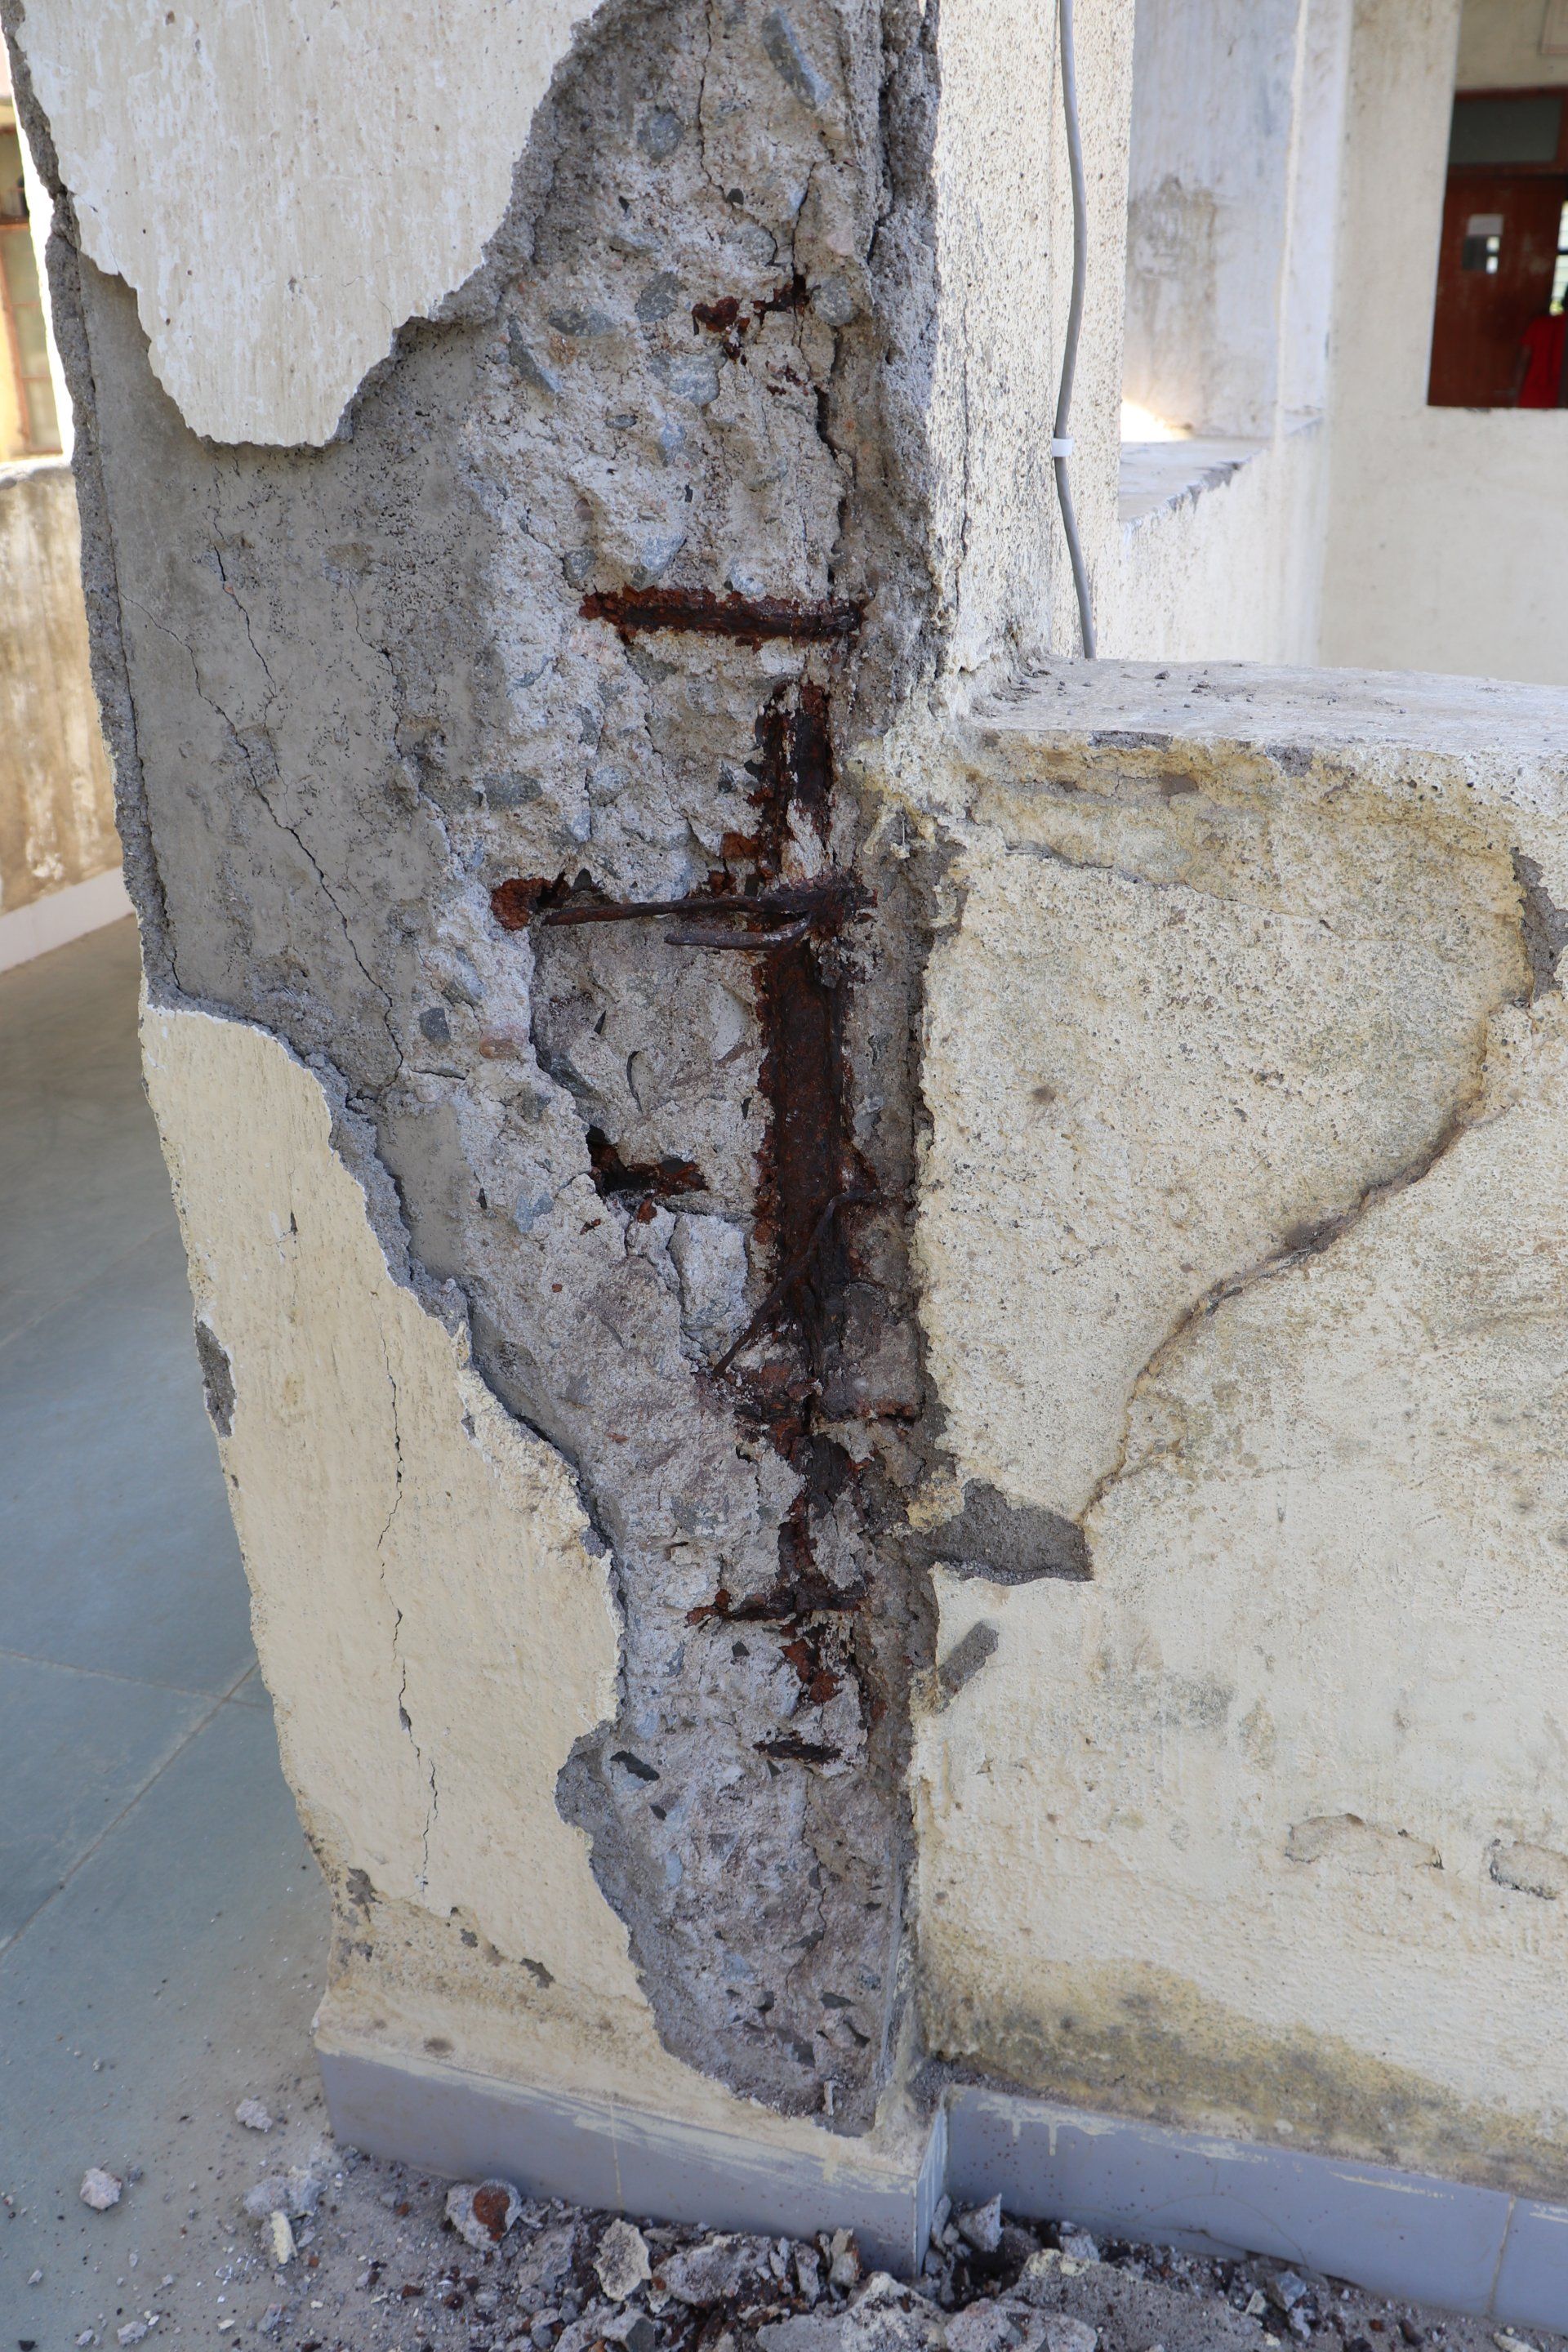 Concrete pillar showing concrete spalling with rebar rusting